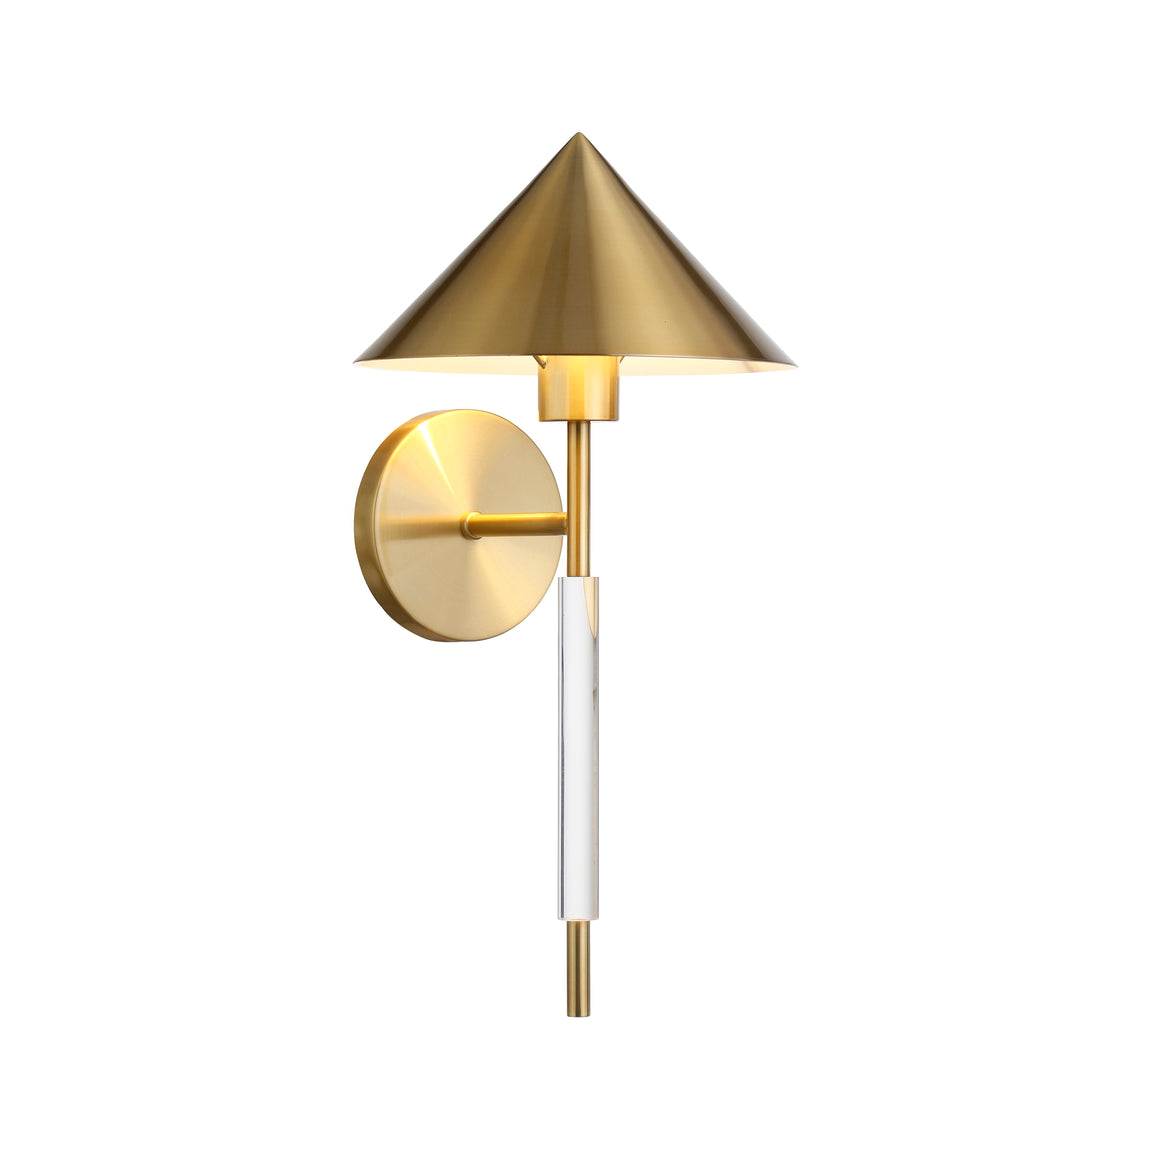 Talon Acrylic Pole Sconce with Antique Brass Shade